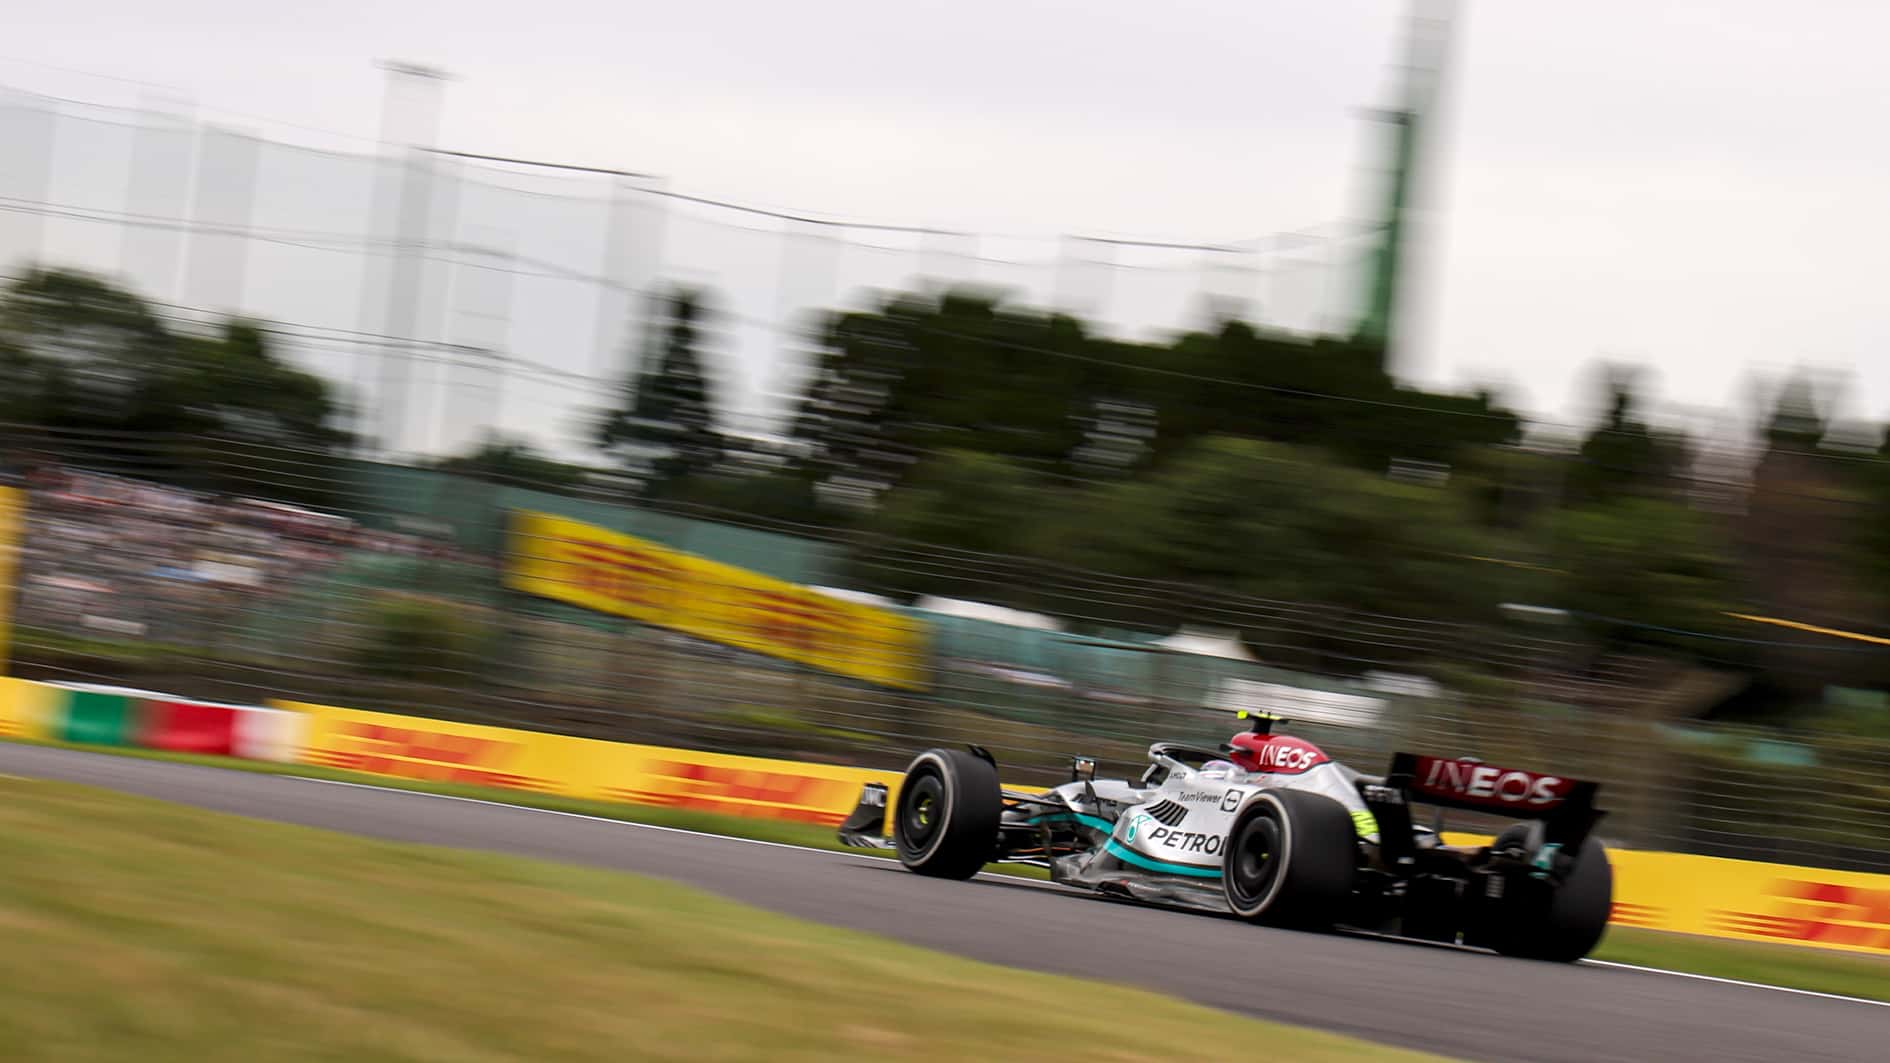 Lewis Hamilton, Japanese GP, 2019 I print by Motorsport Images